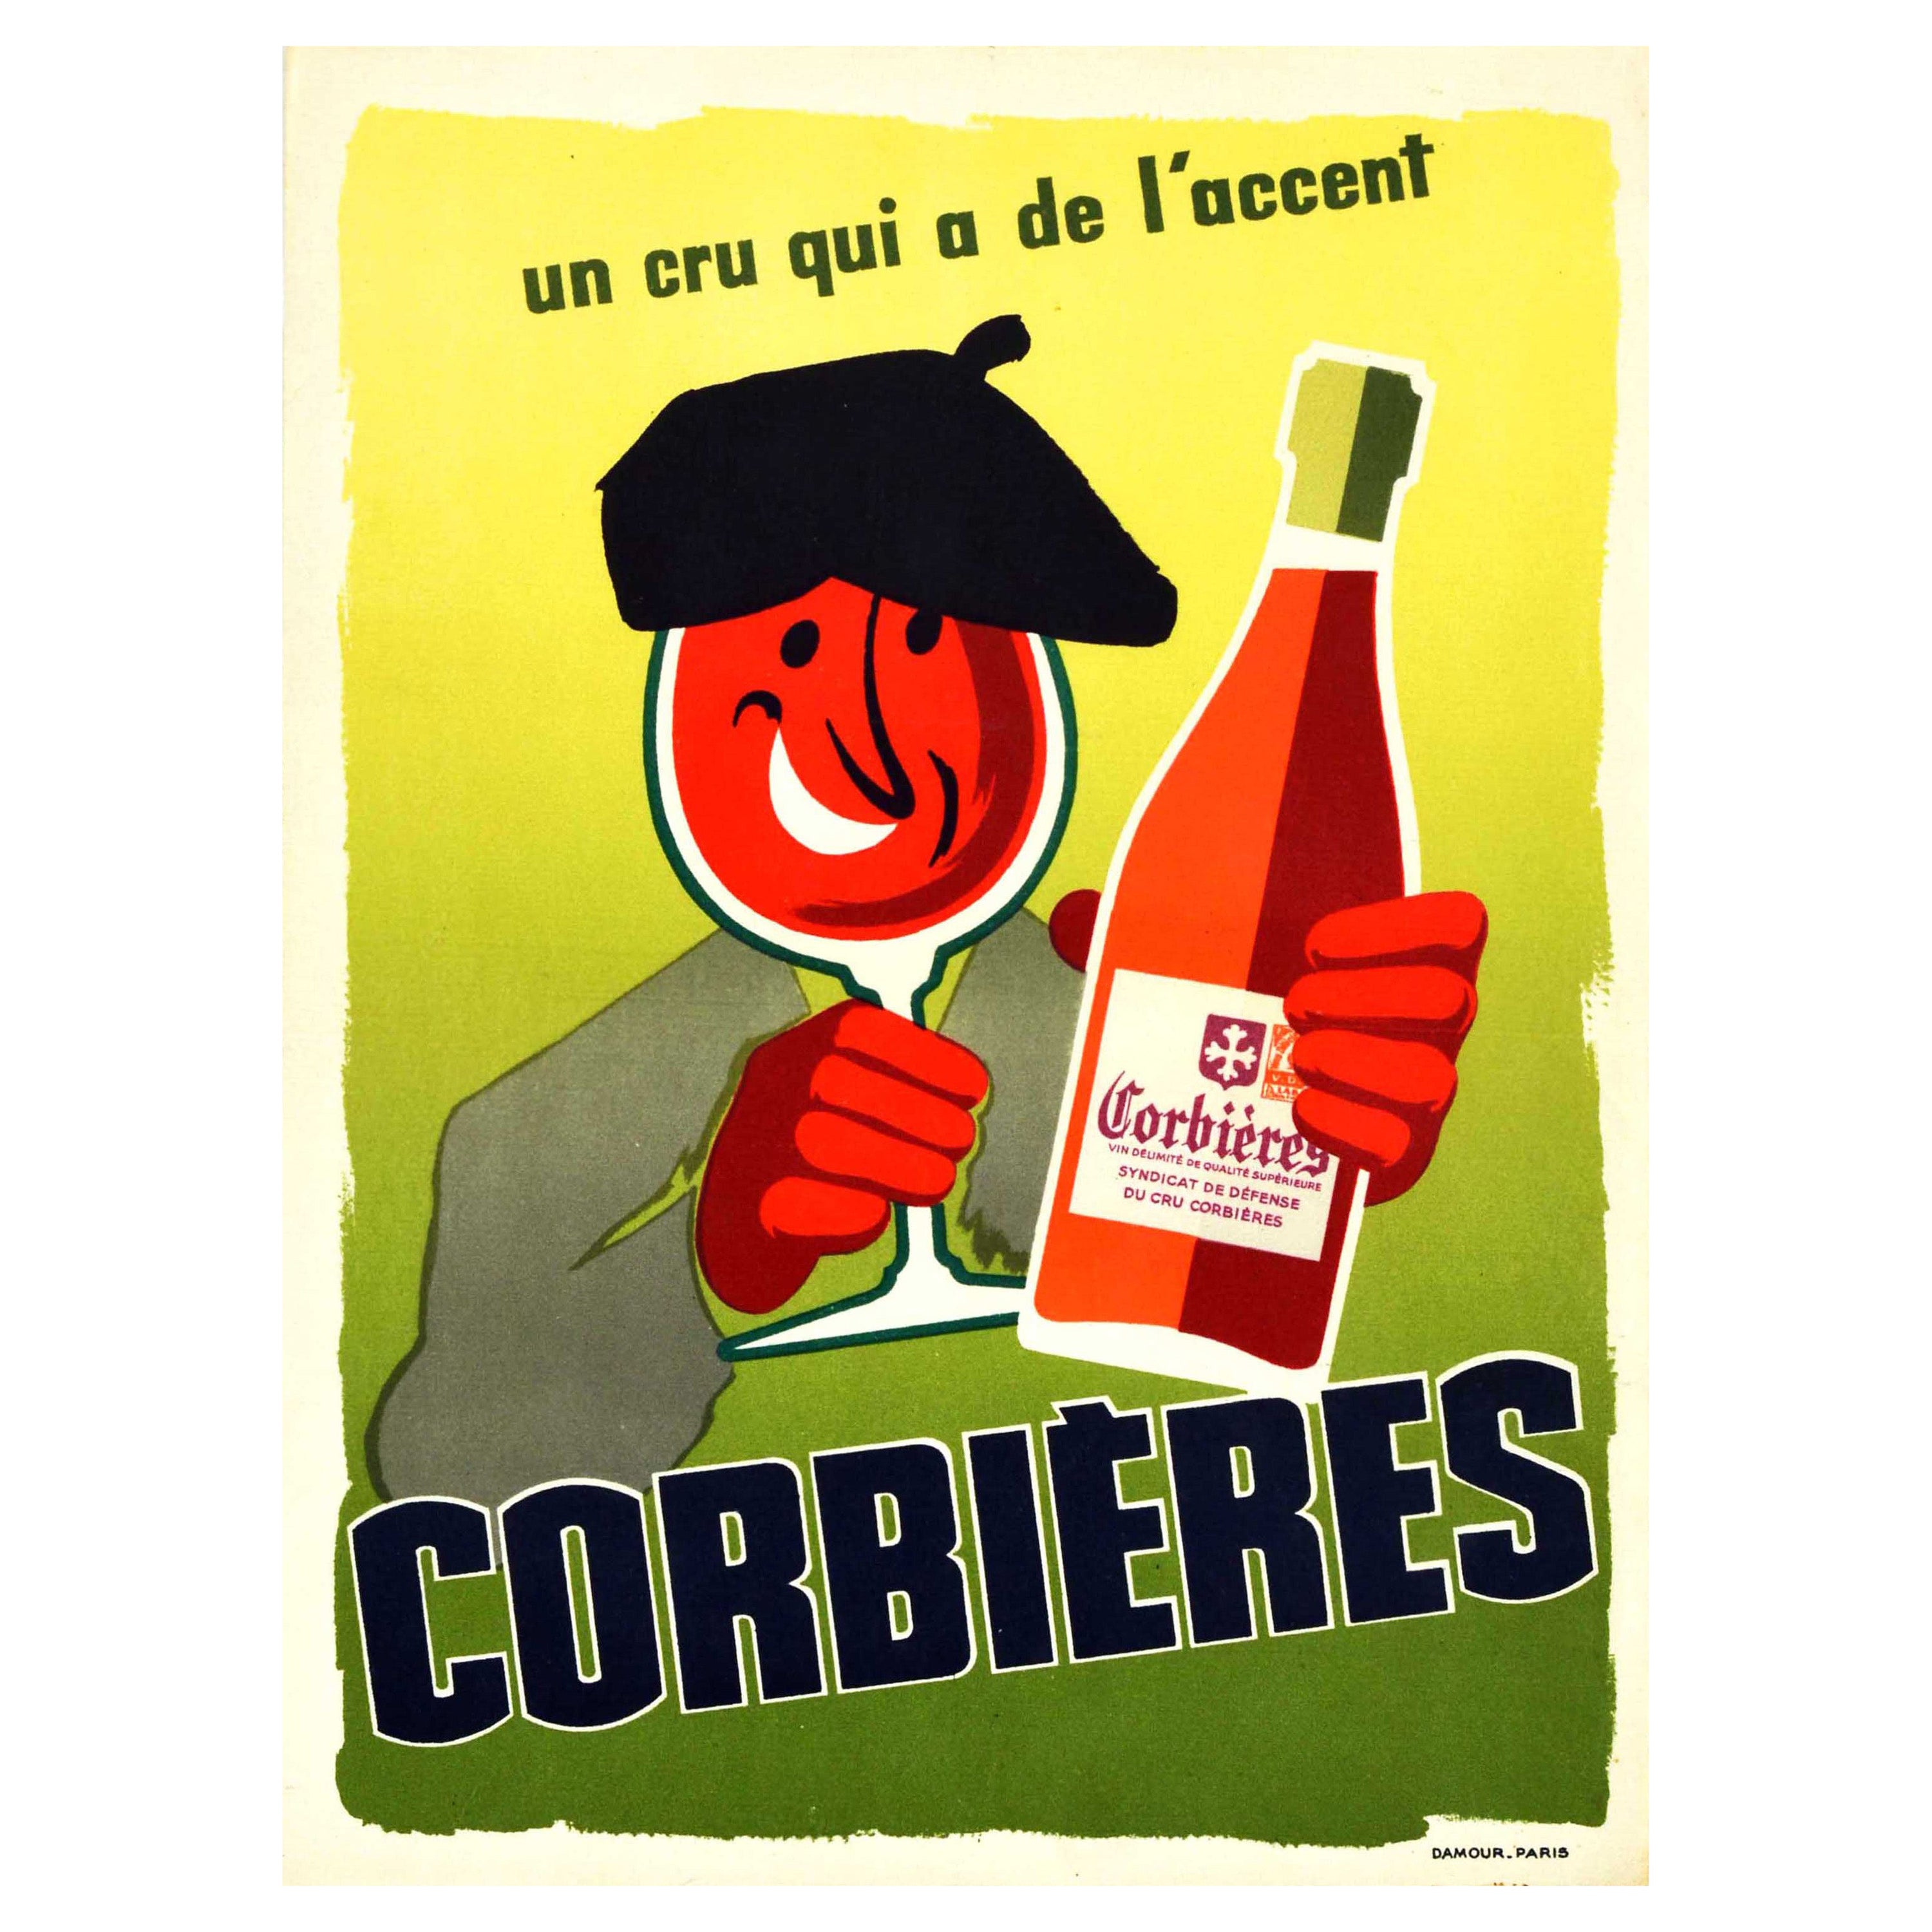 Original Vintage Drink Poster Corbieres AOC Wine France Languedoc Roussillon